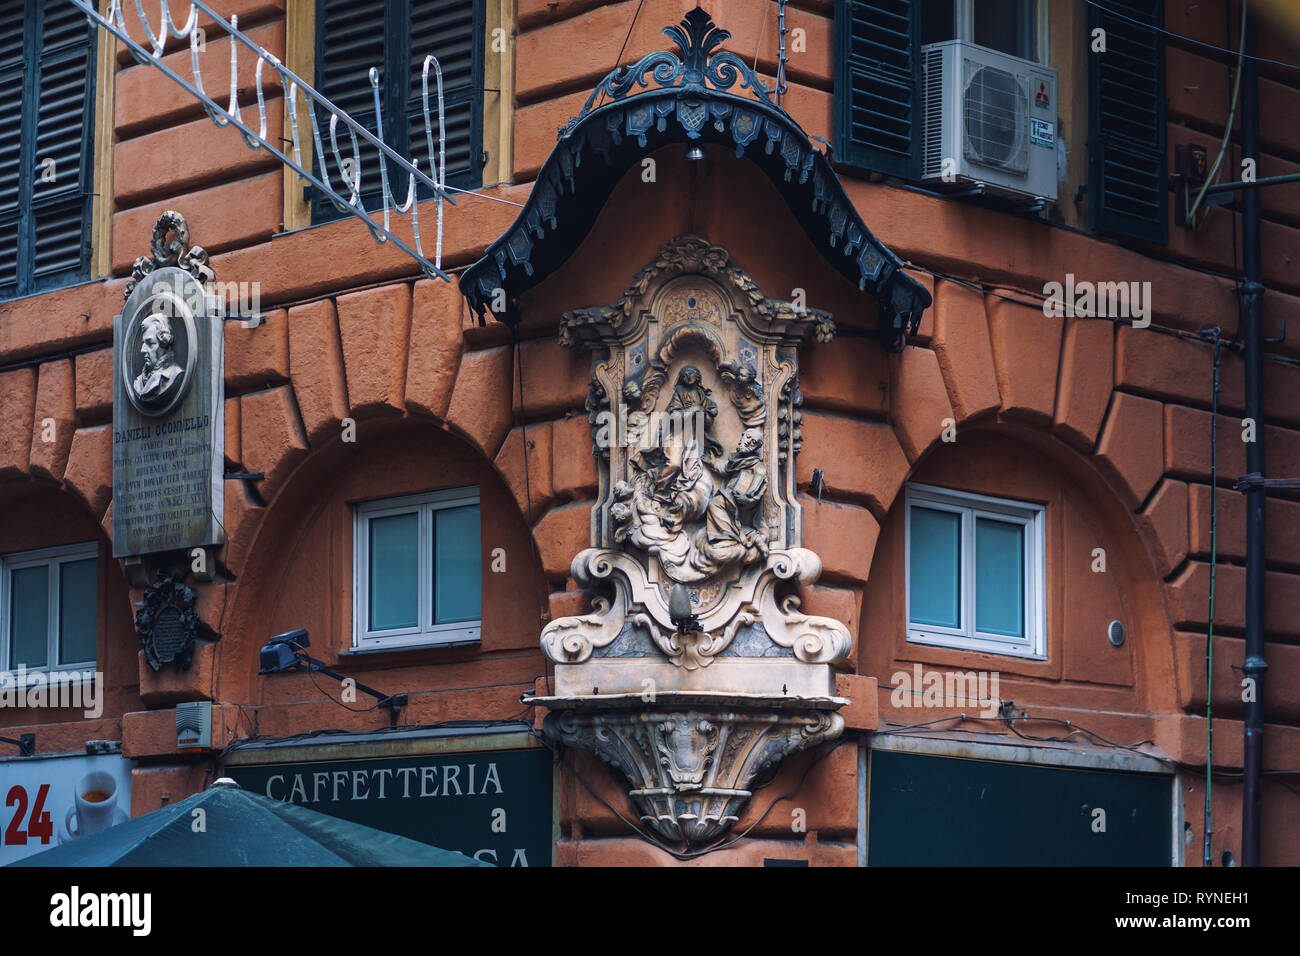 GENOA, ITALY - NOVEMBER 04, 2018 - Madonna shrine on the facade of the old house in Genoa Stock Photo